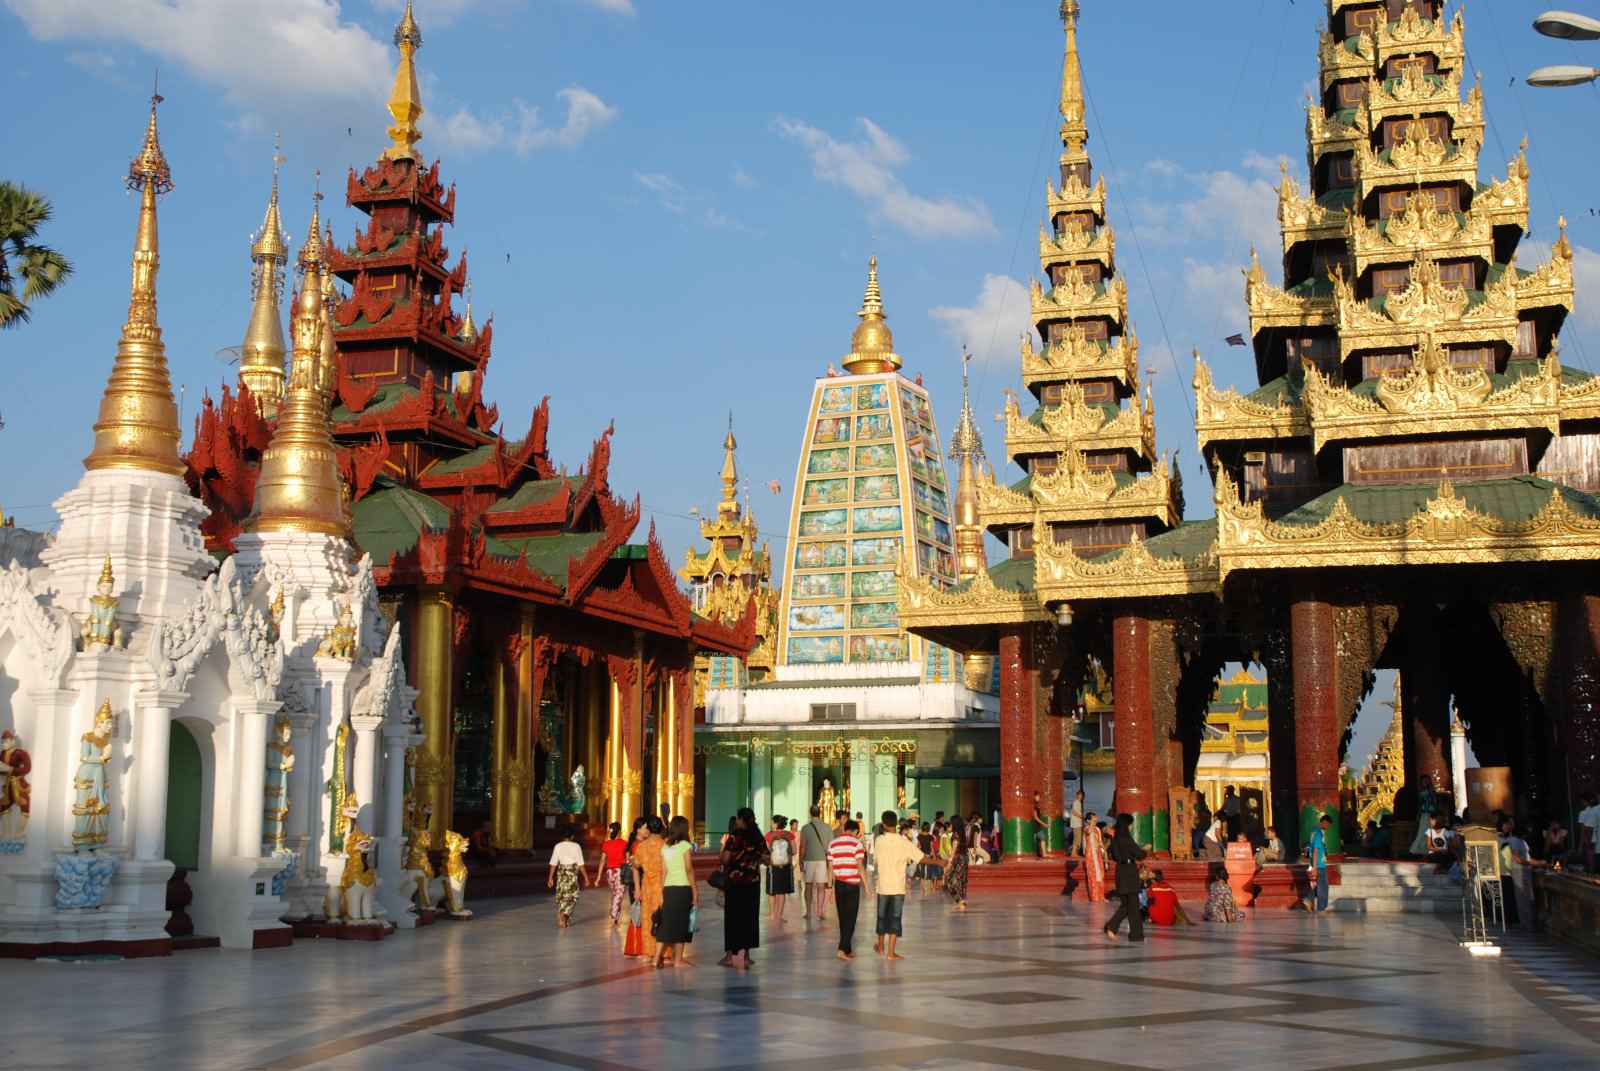 Shwedagon Pagoda Architectural Wonder Picture